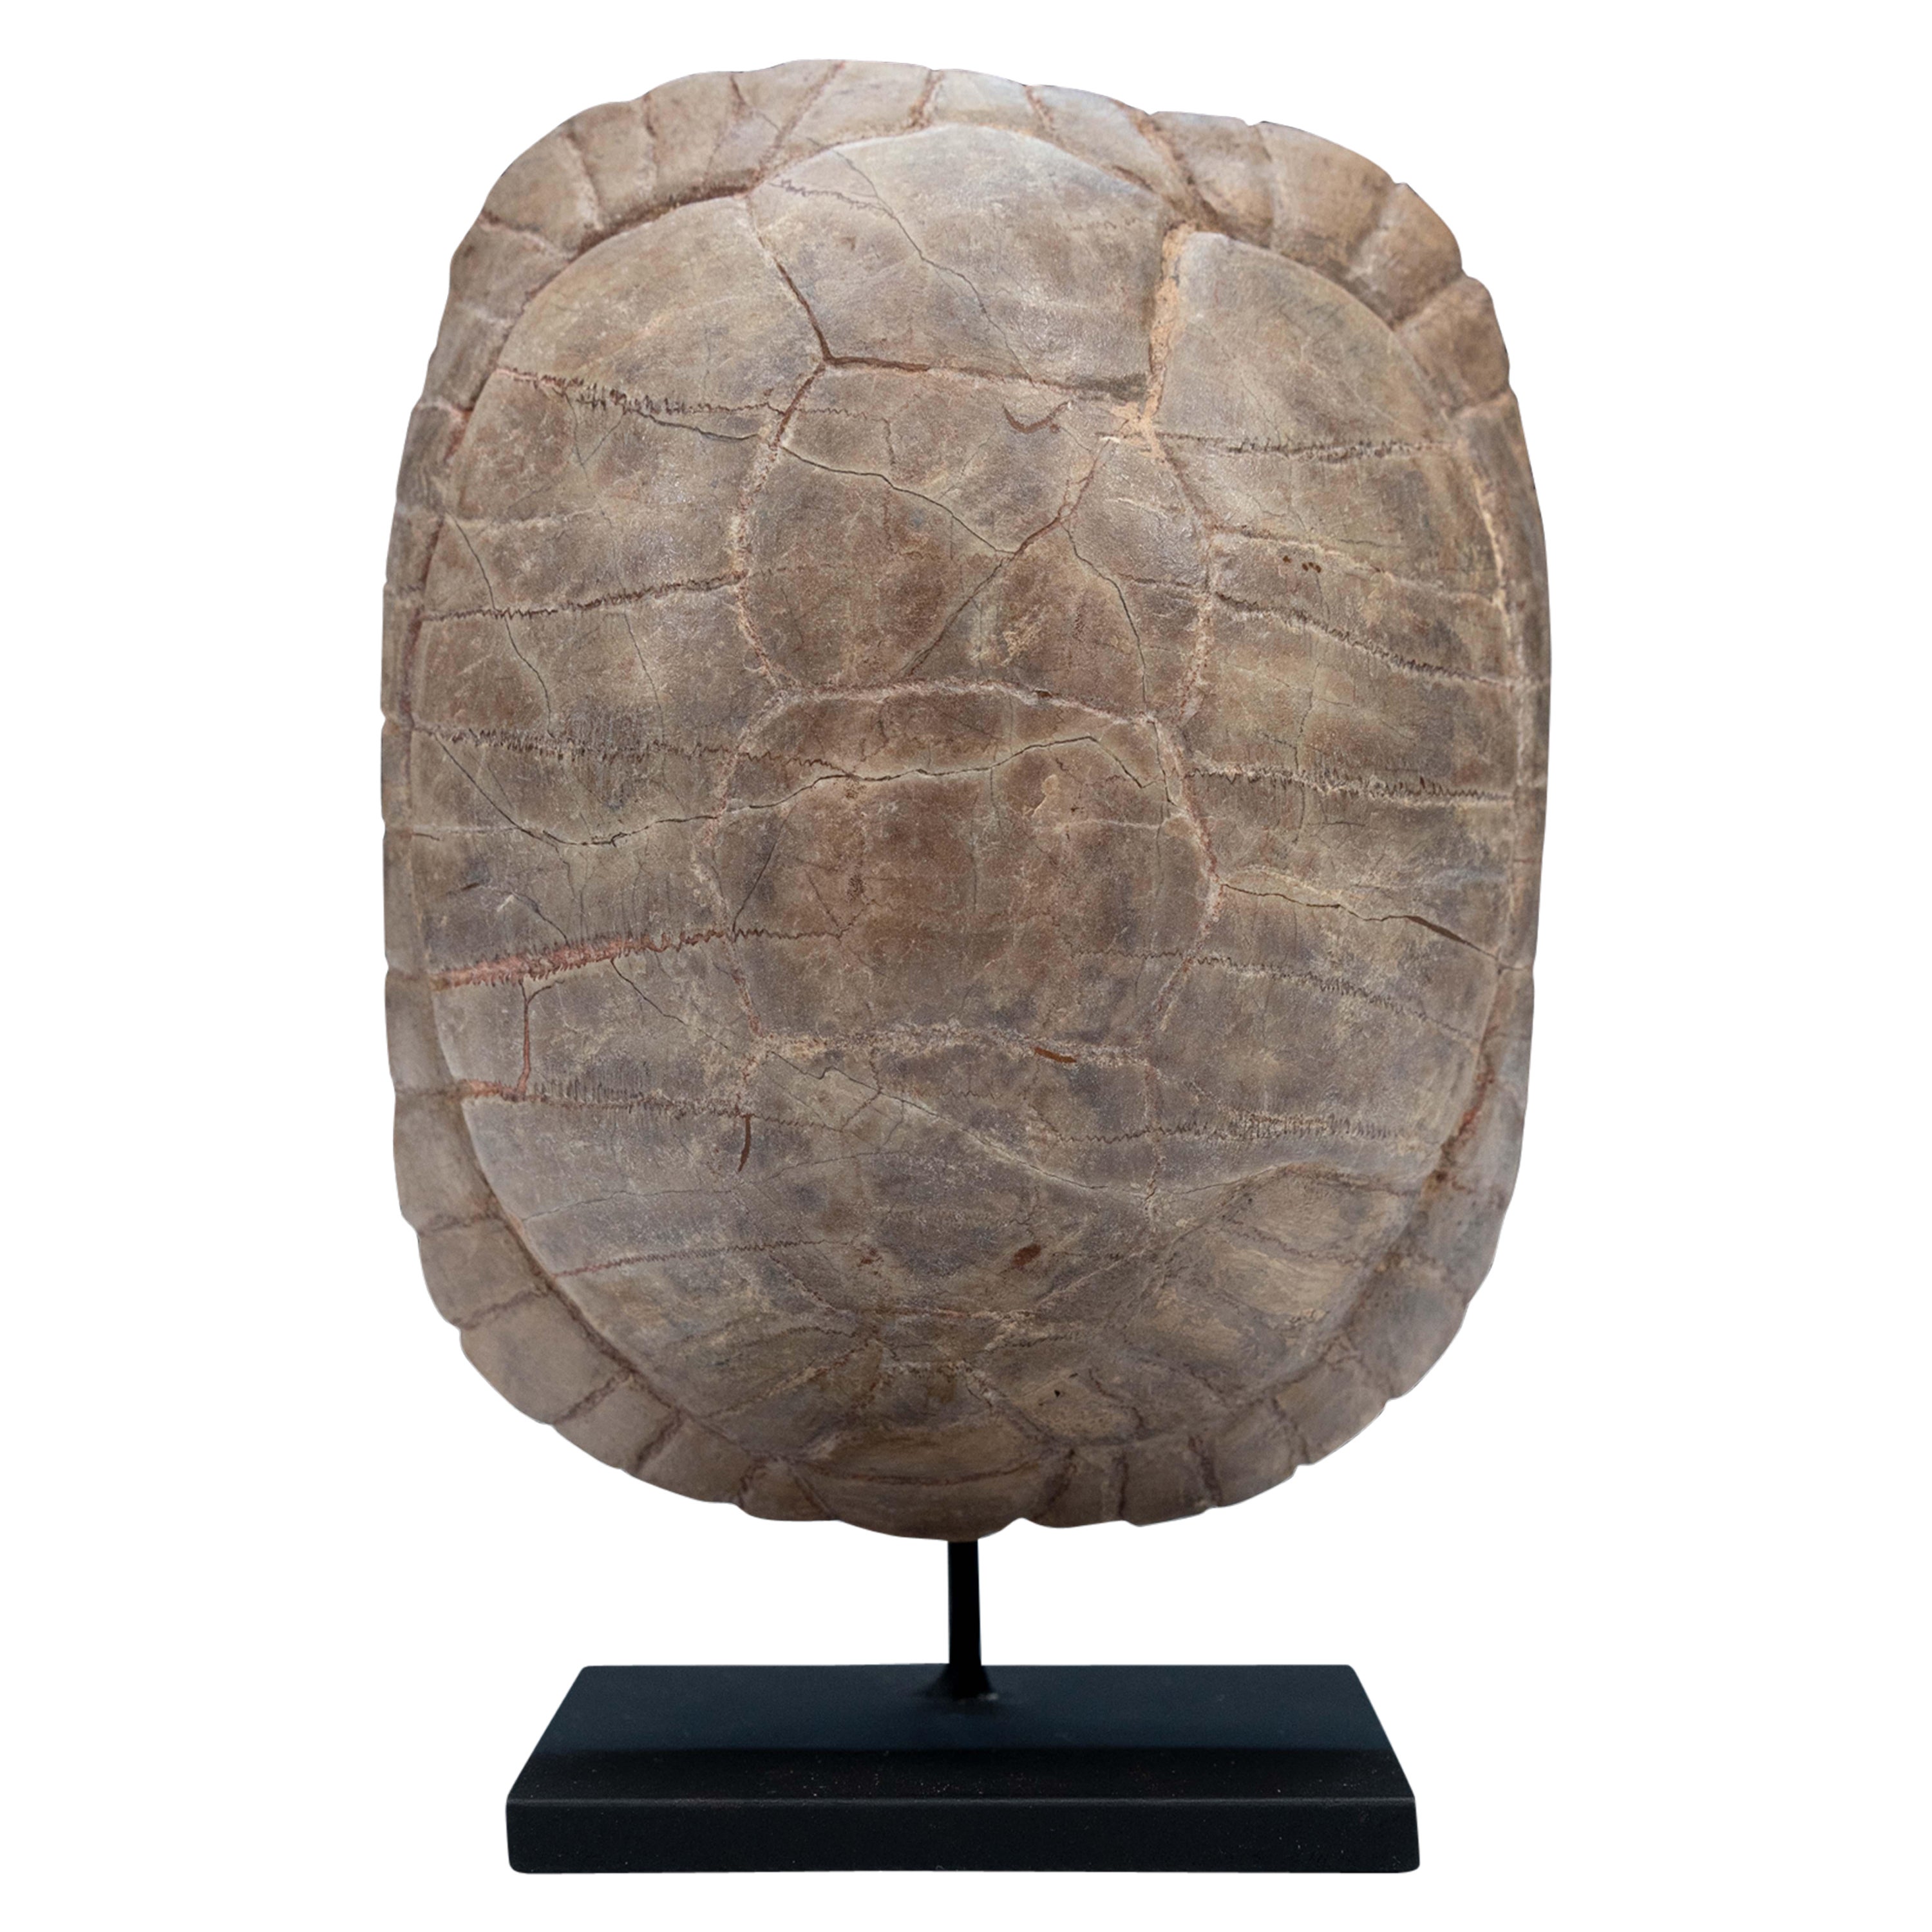 Small Sized Mounted Turtle Fossil South Dakota Oligocene Period